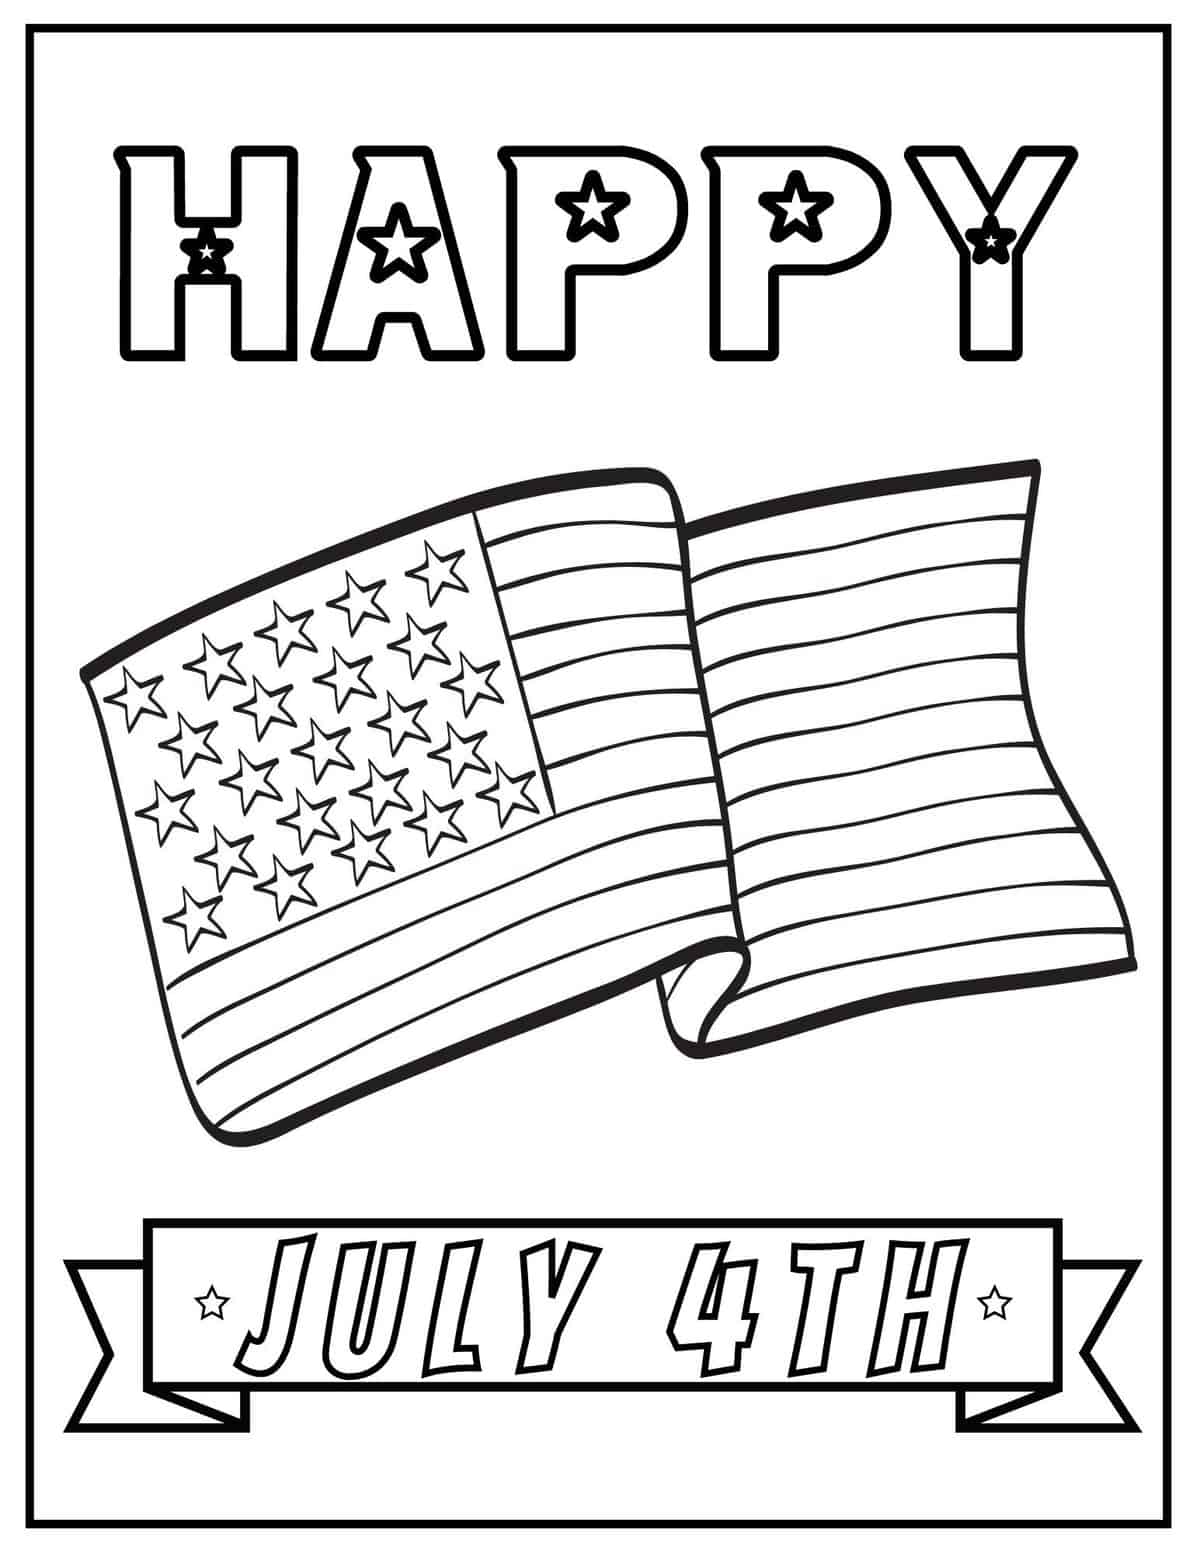 happy july 4th us flag